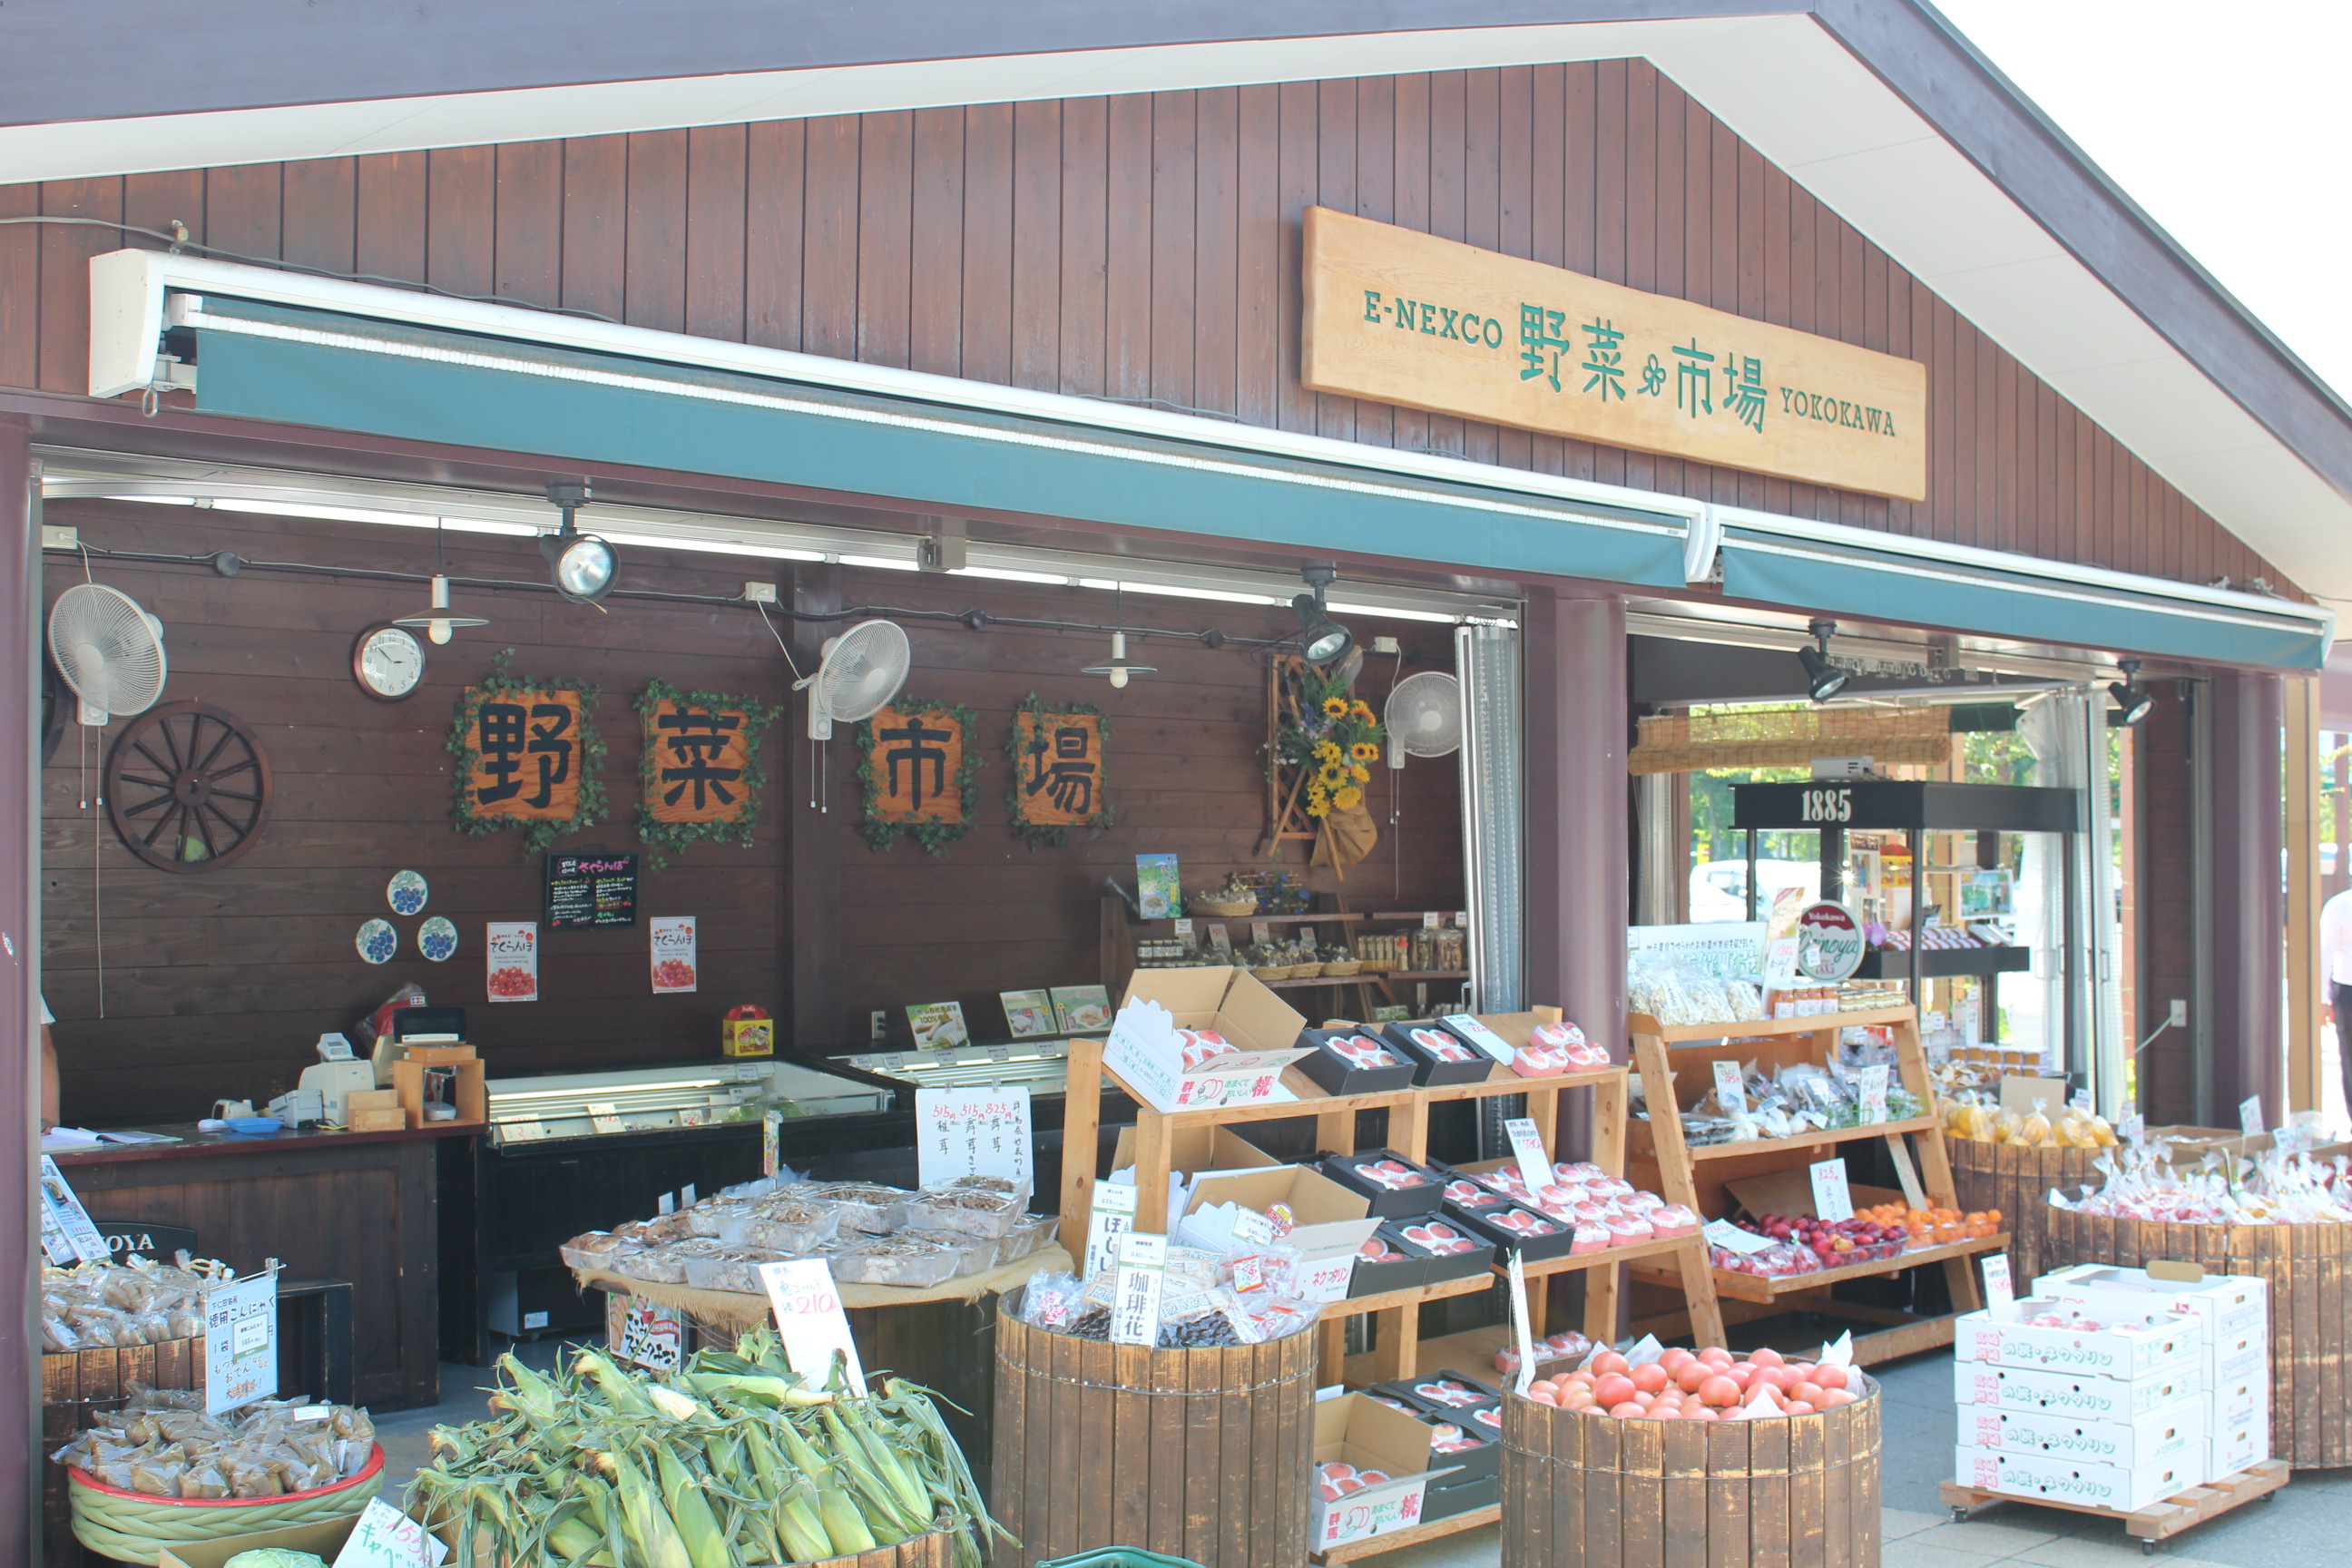 E-NEXCO 野菜市場のイメージ画像